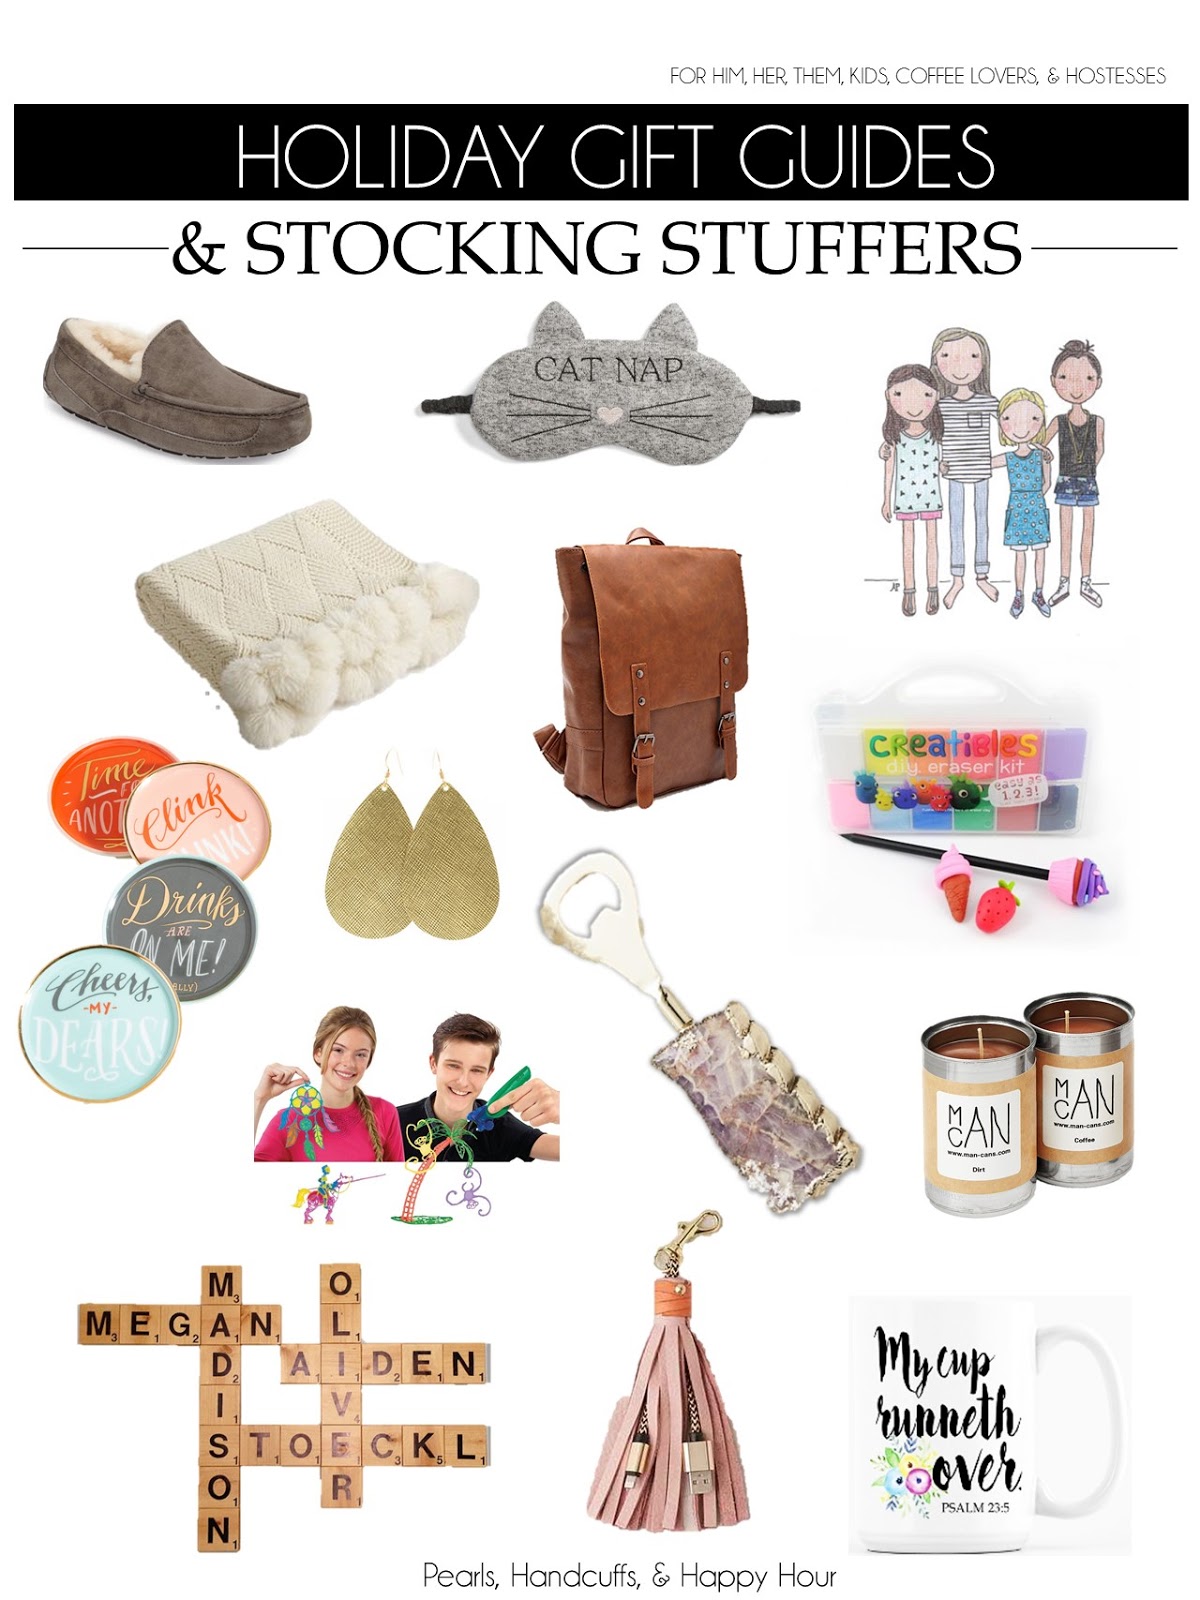 Men's Stocking Stuffers - The Buy Guide